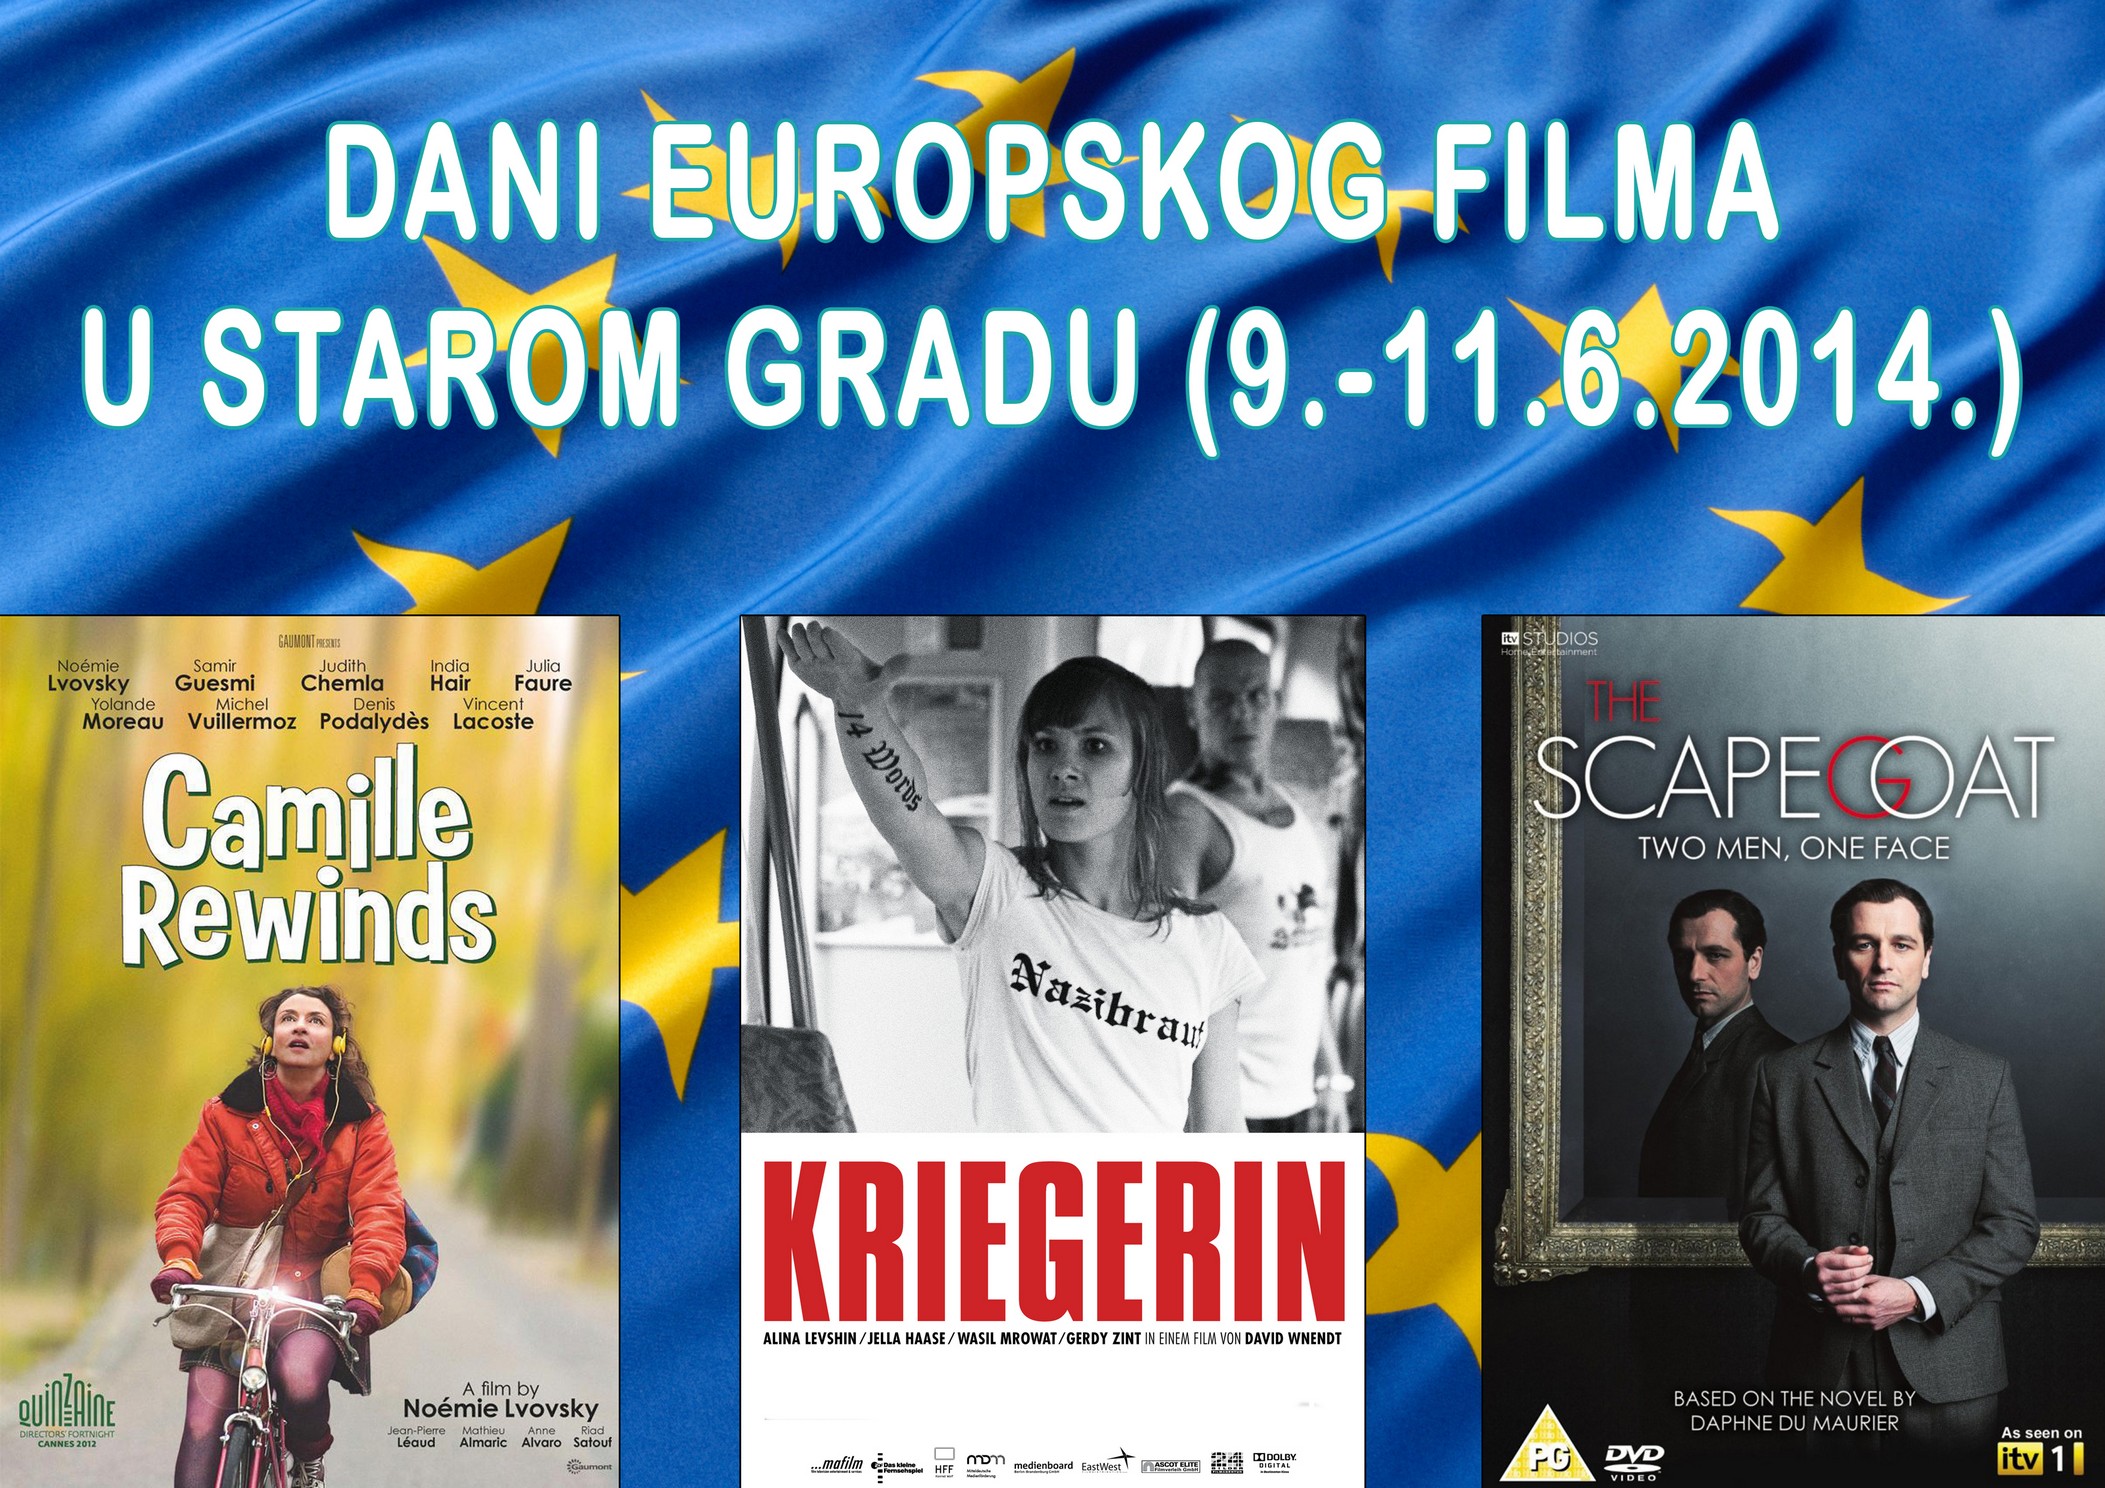 You are currently viewing Dani europskog filma u Starom gradu 9.-11. lipnja